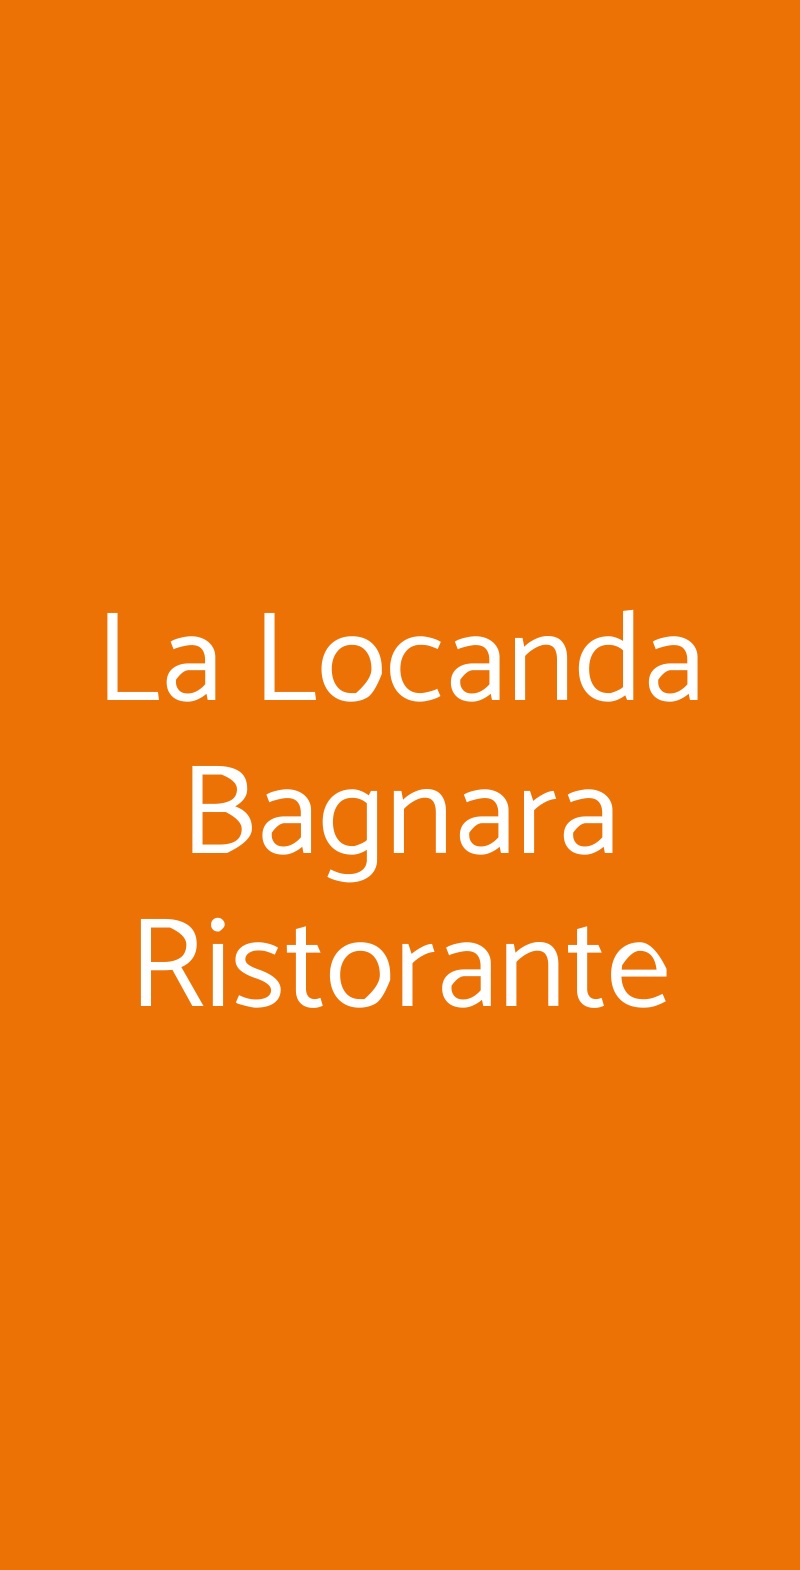 La Locanda Bagnara Ristorante Bagnara di Romagna menù 1 pagina